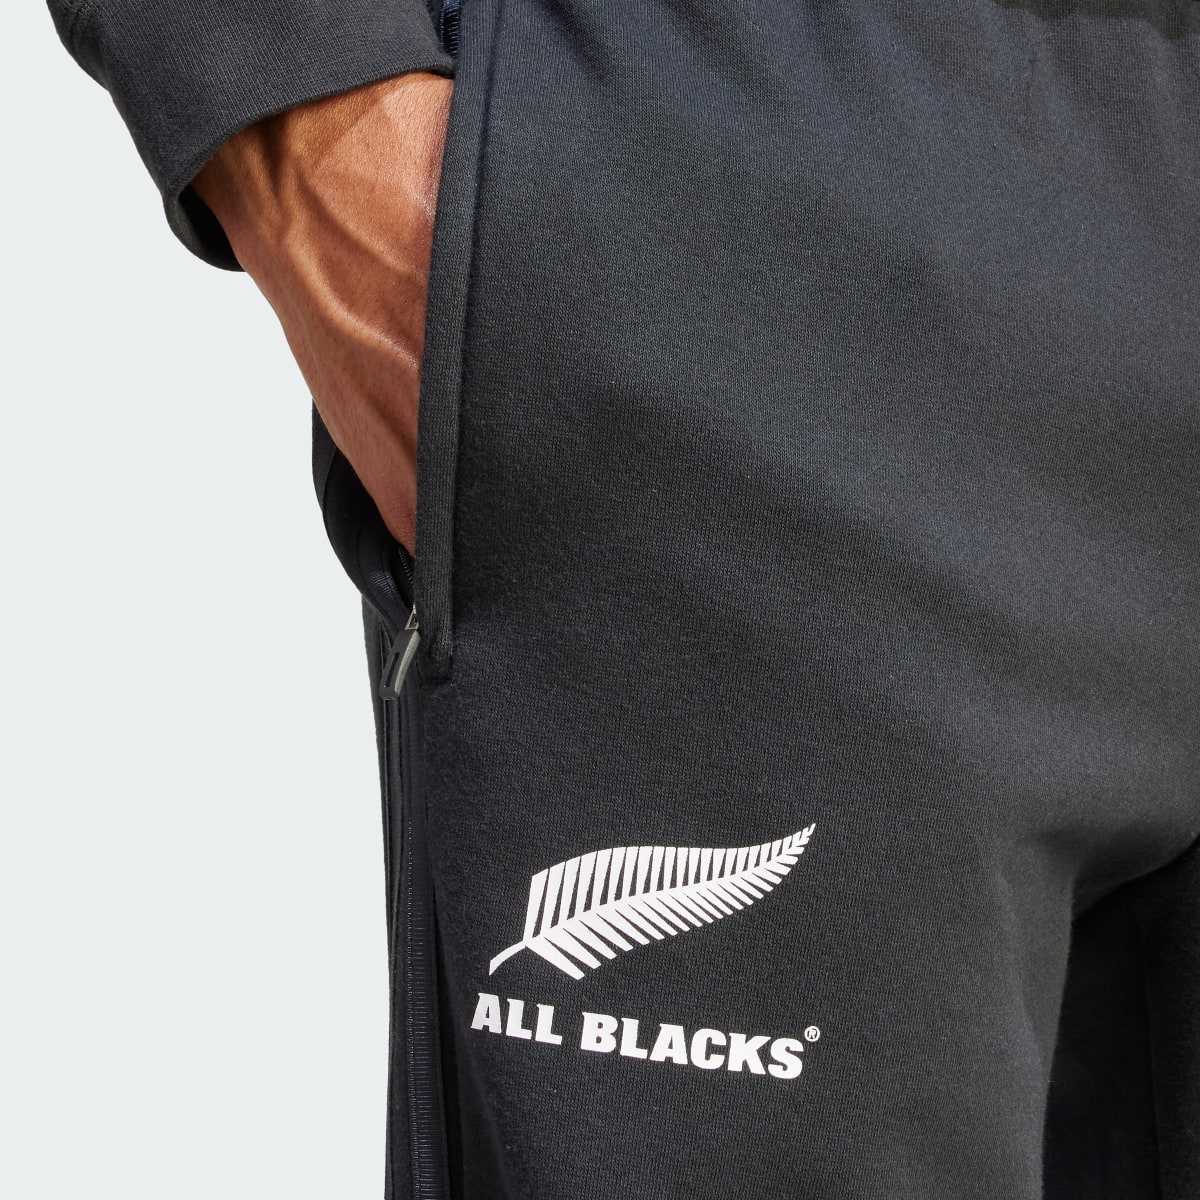 Adidas All Blacks Rugby 3-Stripes Sweat Pants. 7